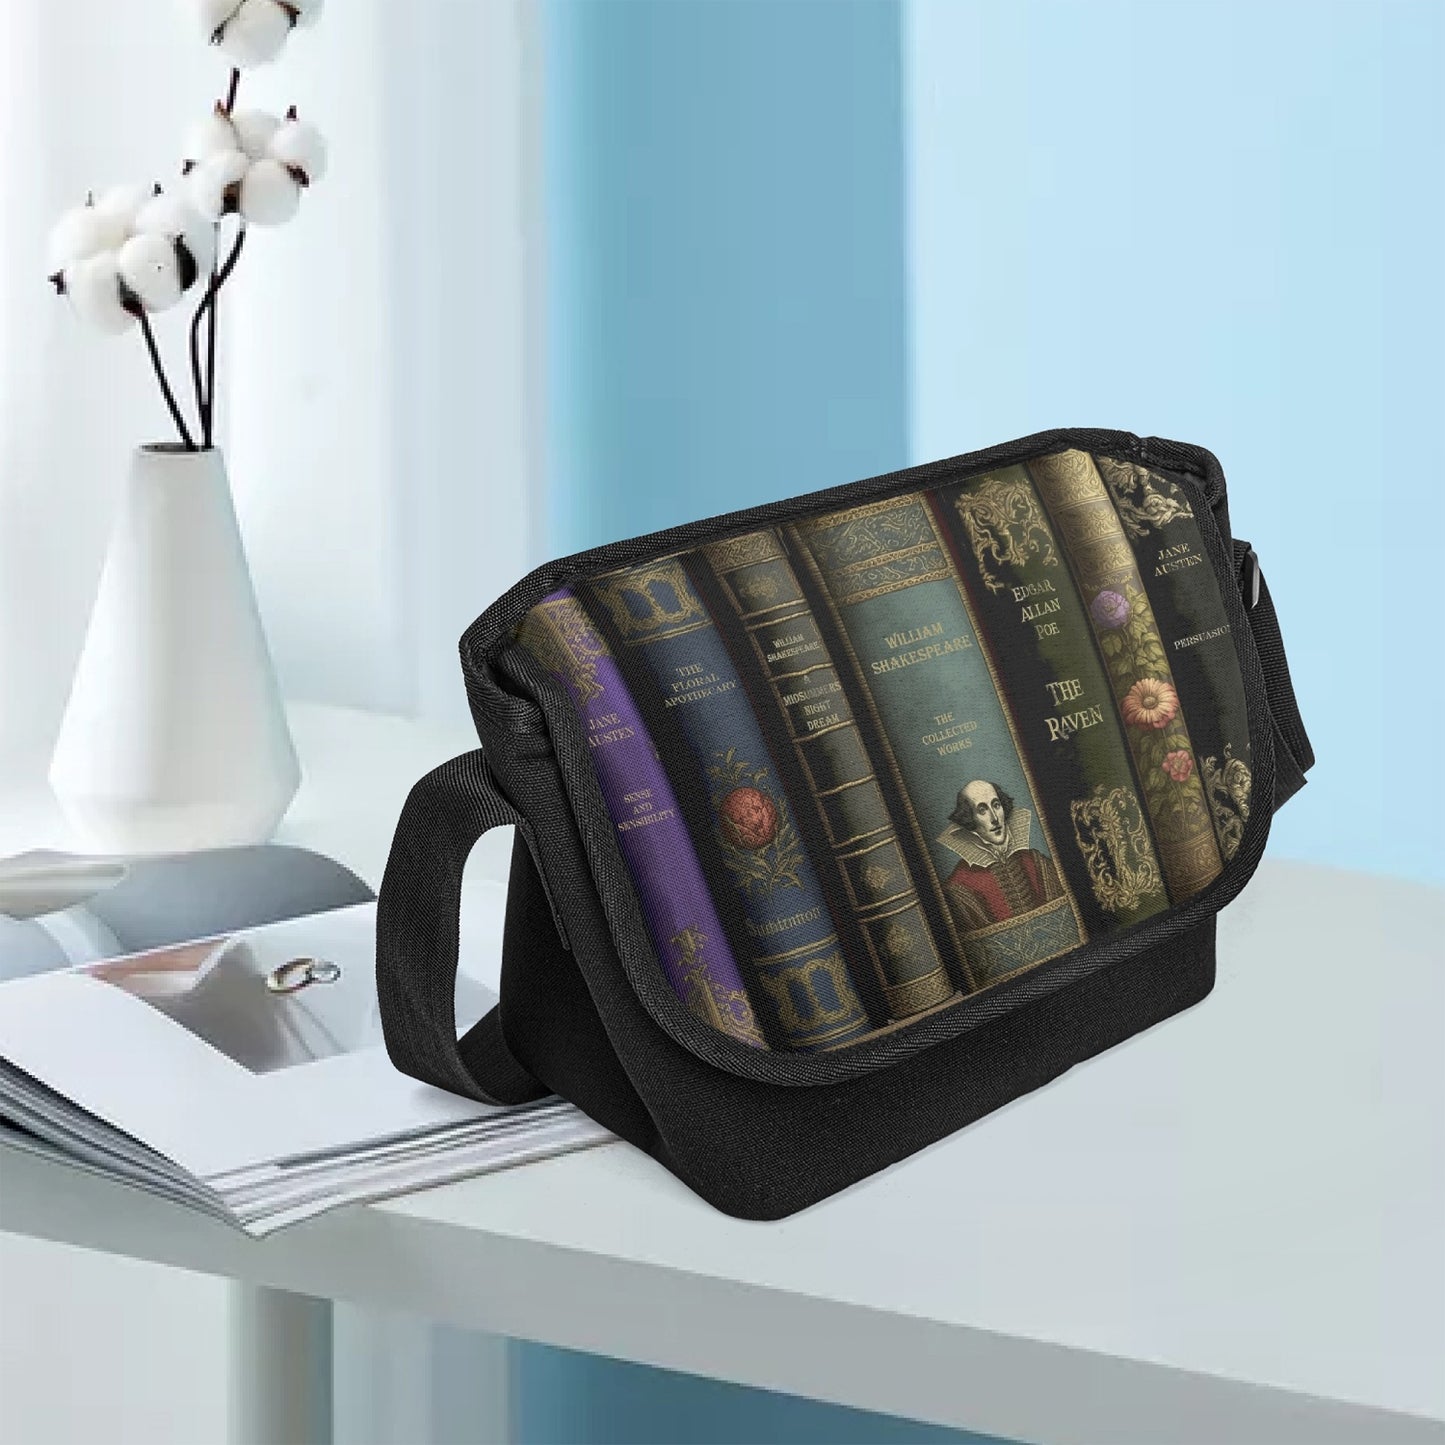 Dark Academia Classic Literature Library Book Bag - Messenger School Bag (JPMESSBOOKS)